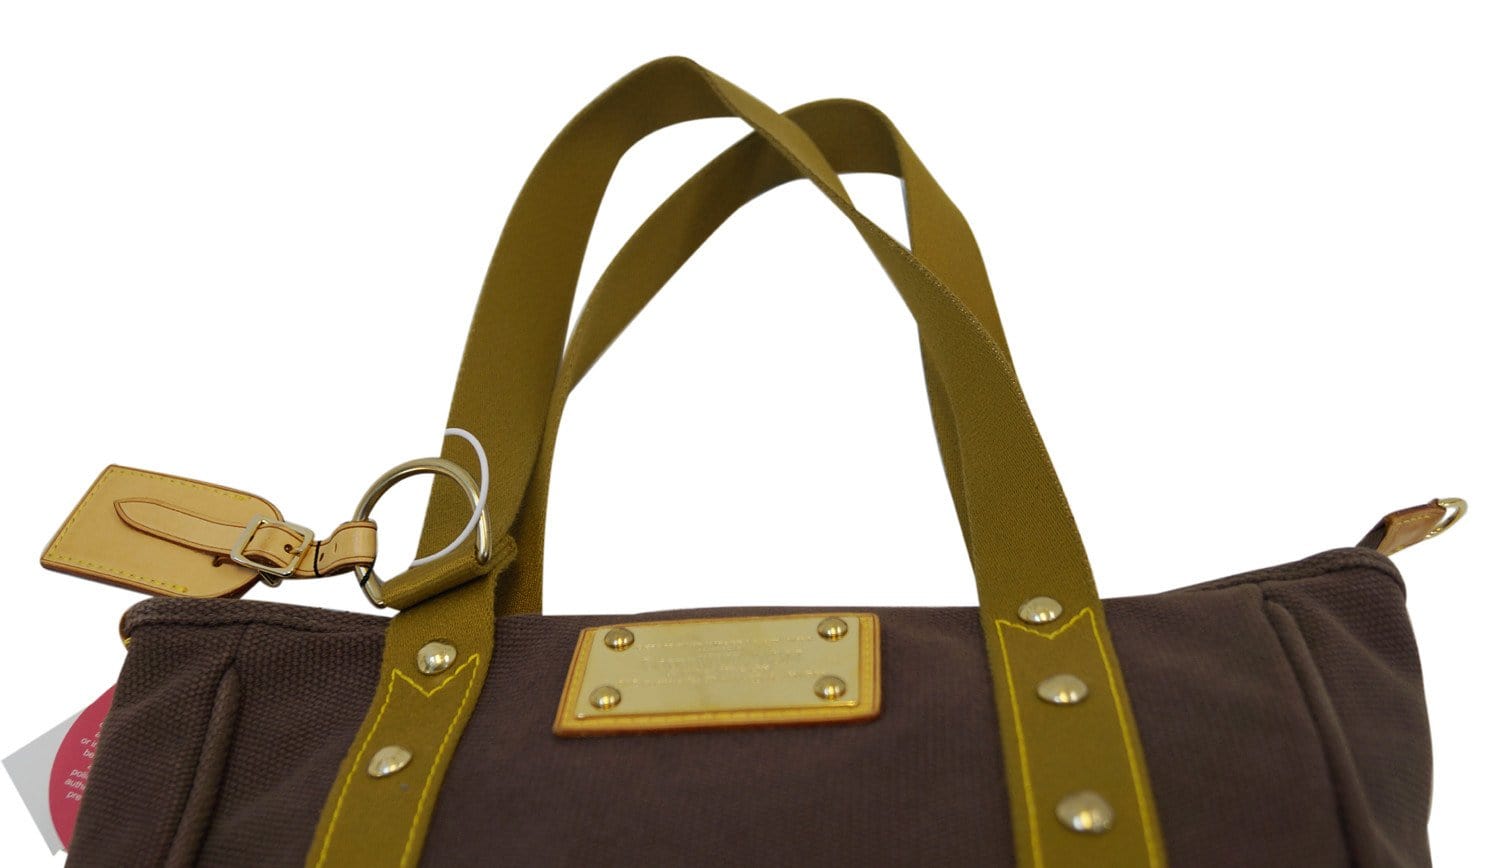 Louis Vuitton Antigua shopping bag in brown and green canvas